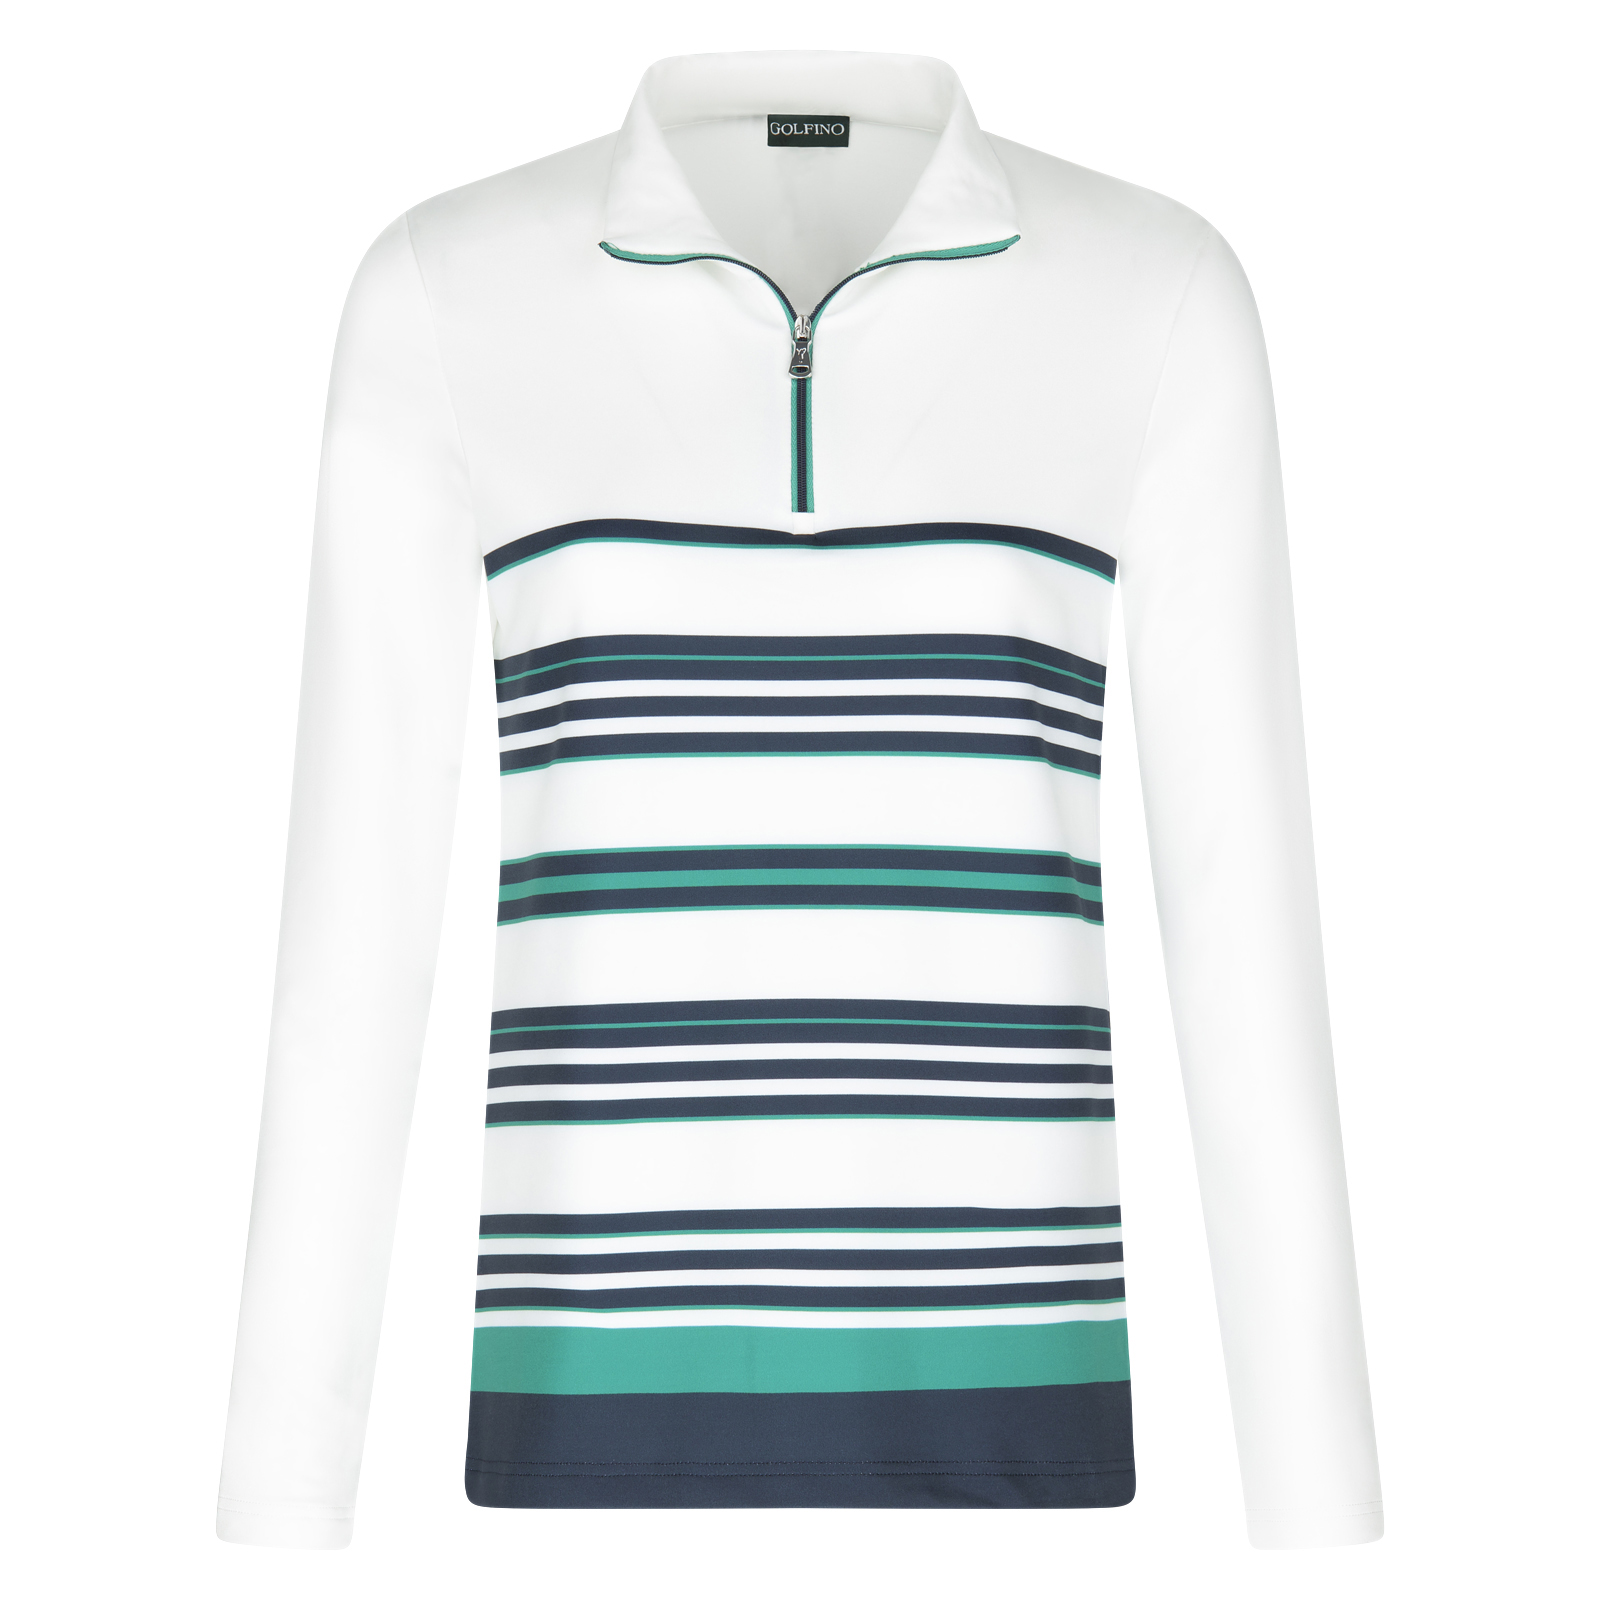 Ladies' long-sleeved, striped stretch golf shirt in Polarlight